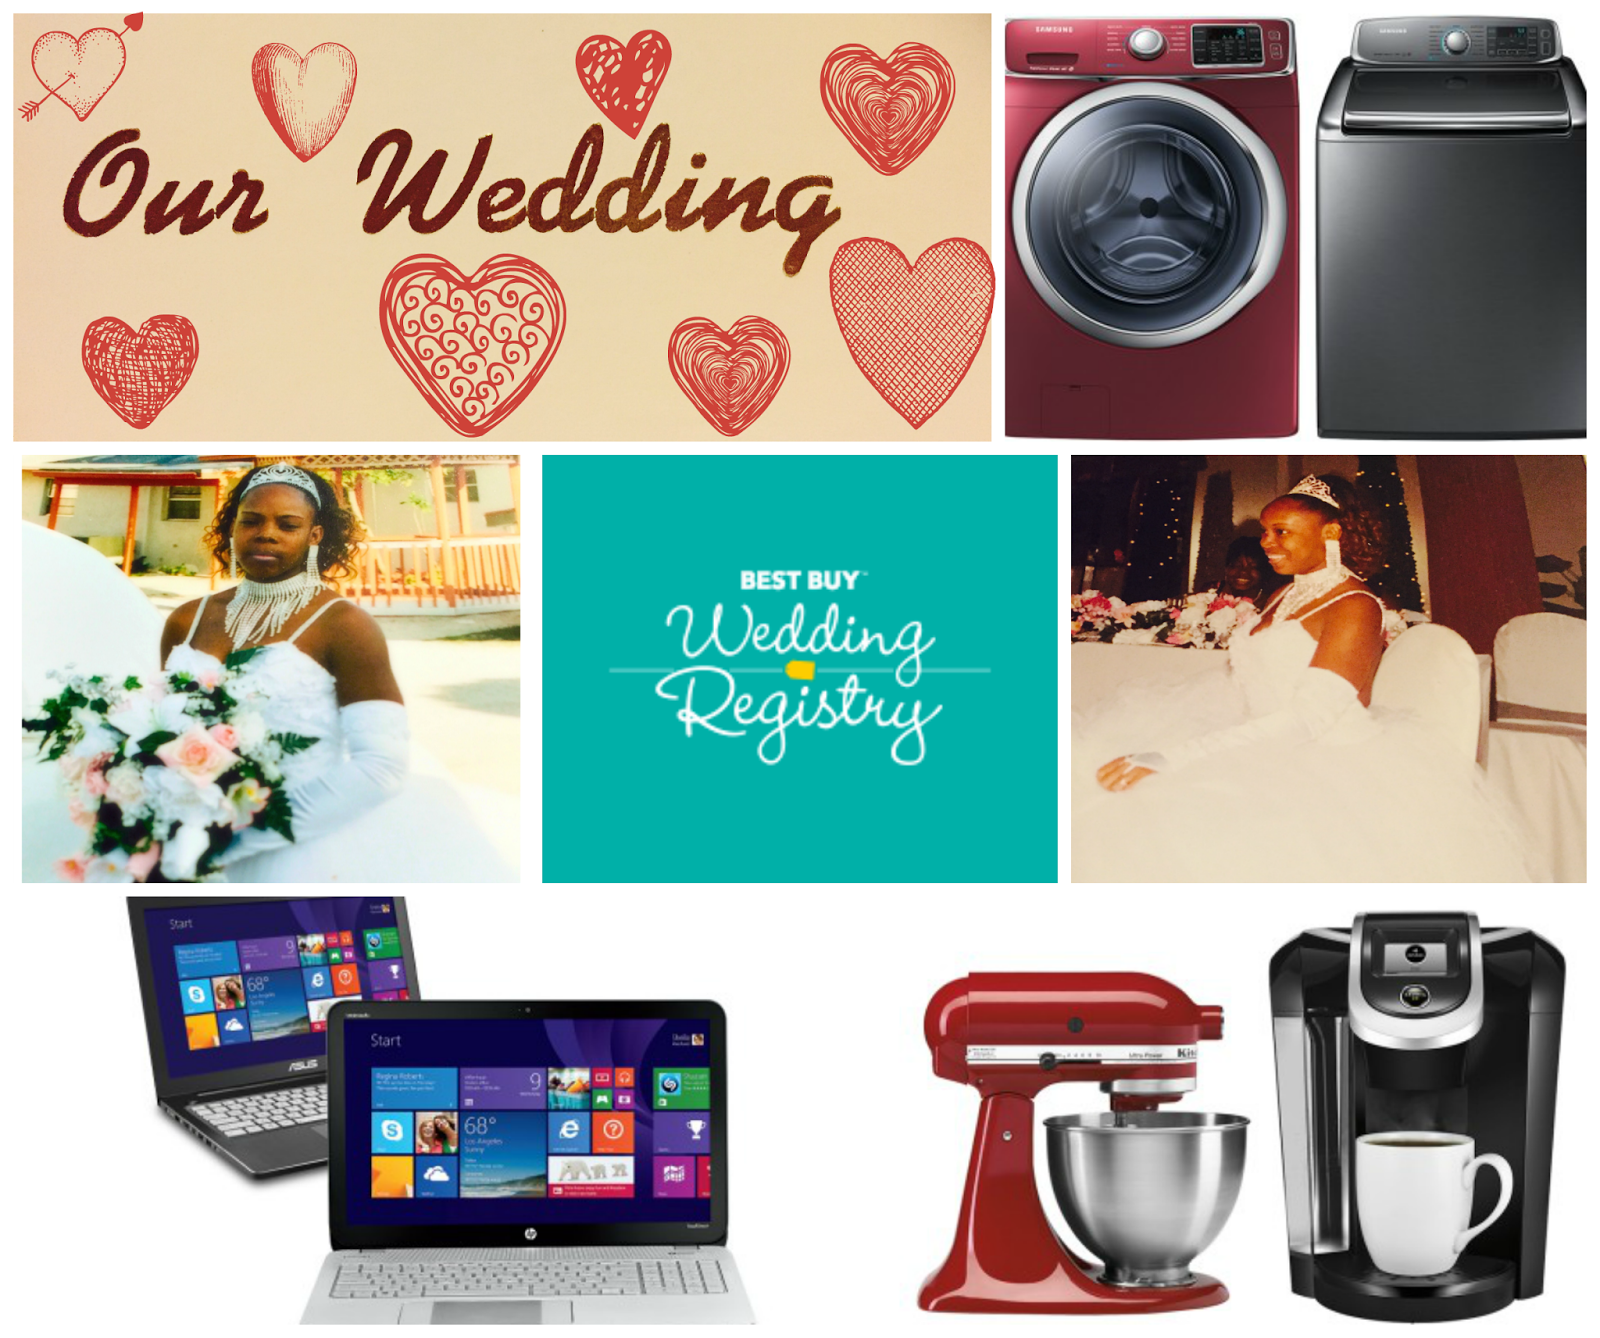 http://www.bestbuy.com/site/life-events/wedding-registry/pcmcat342800050014.c?id=pcmcat342800050014&ref=201&loc=4